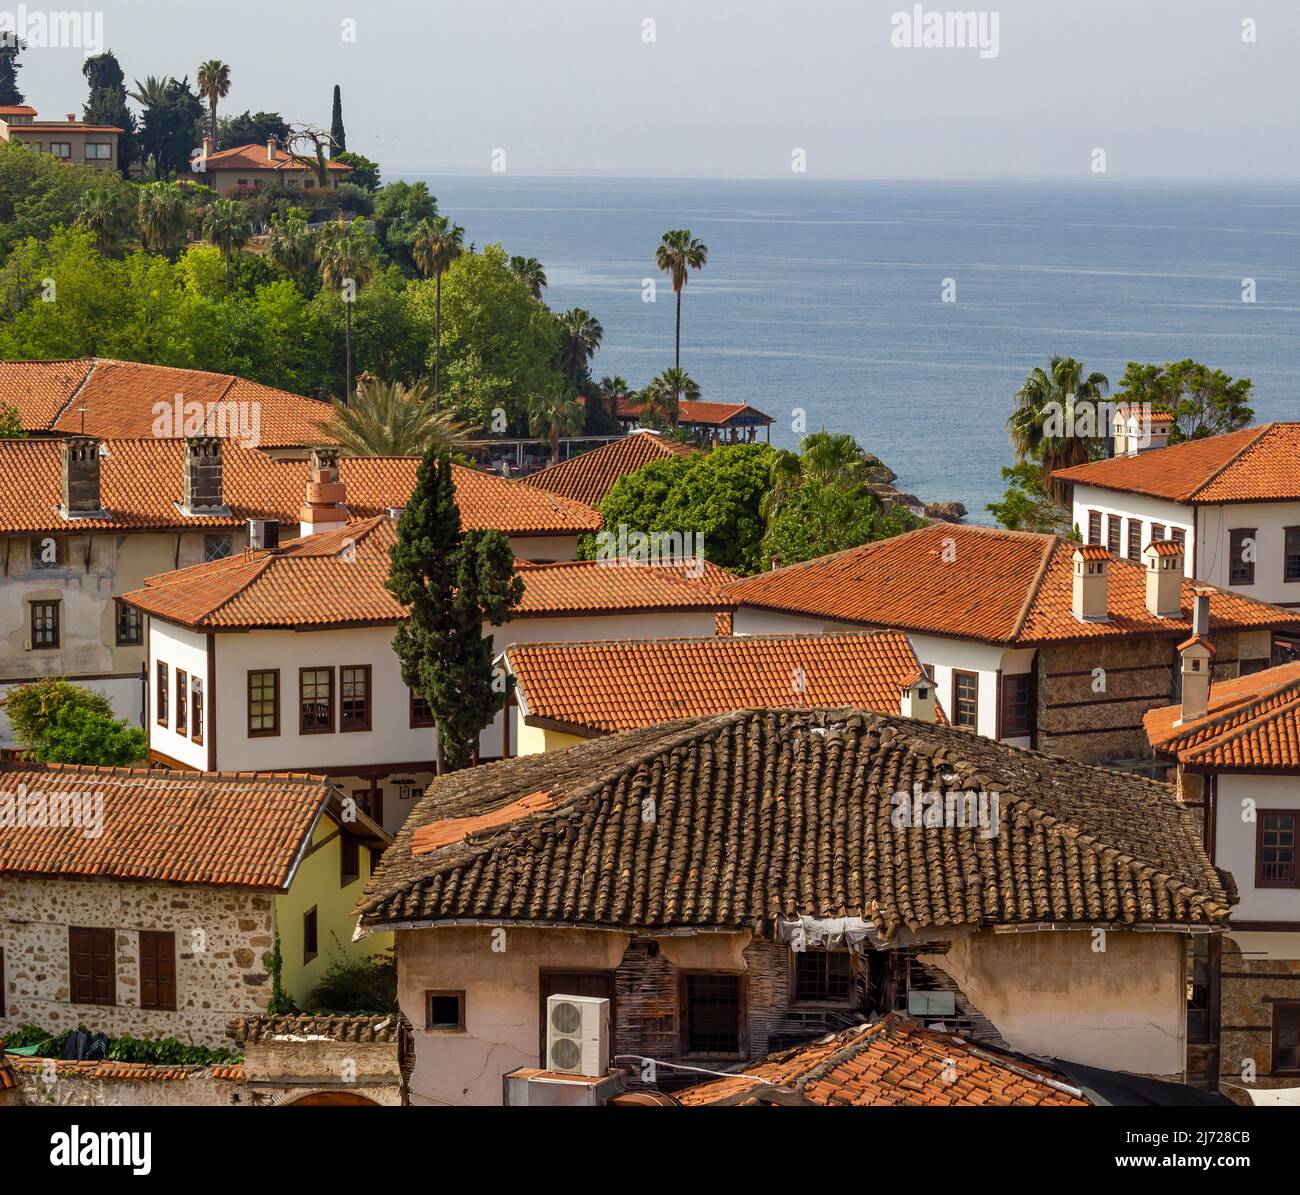 Alte Stadthäuser mit grünen Bäumen, blauem Himmel, Meeresboden. Atemberaubender Blick auf mediterrane Altstadthäuser. Stockfoto